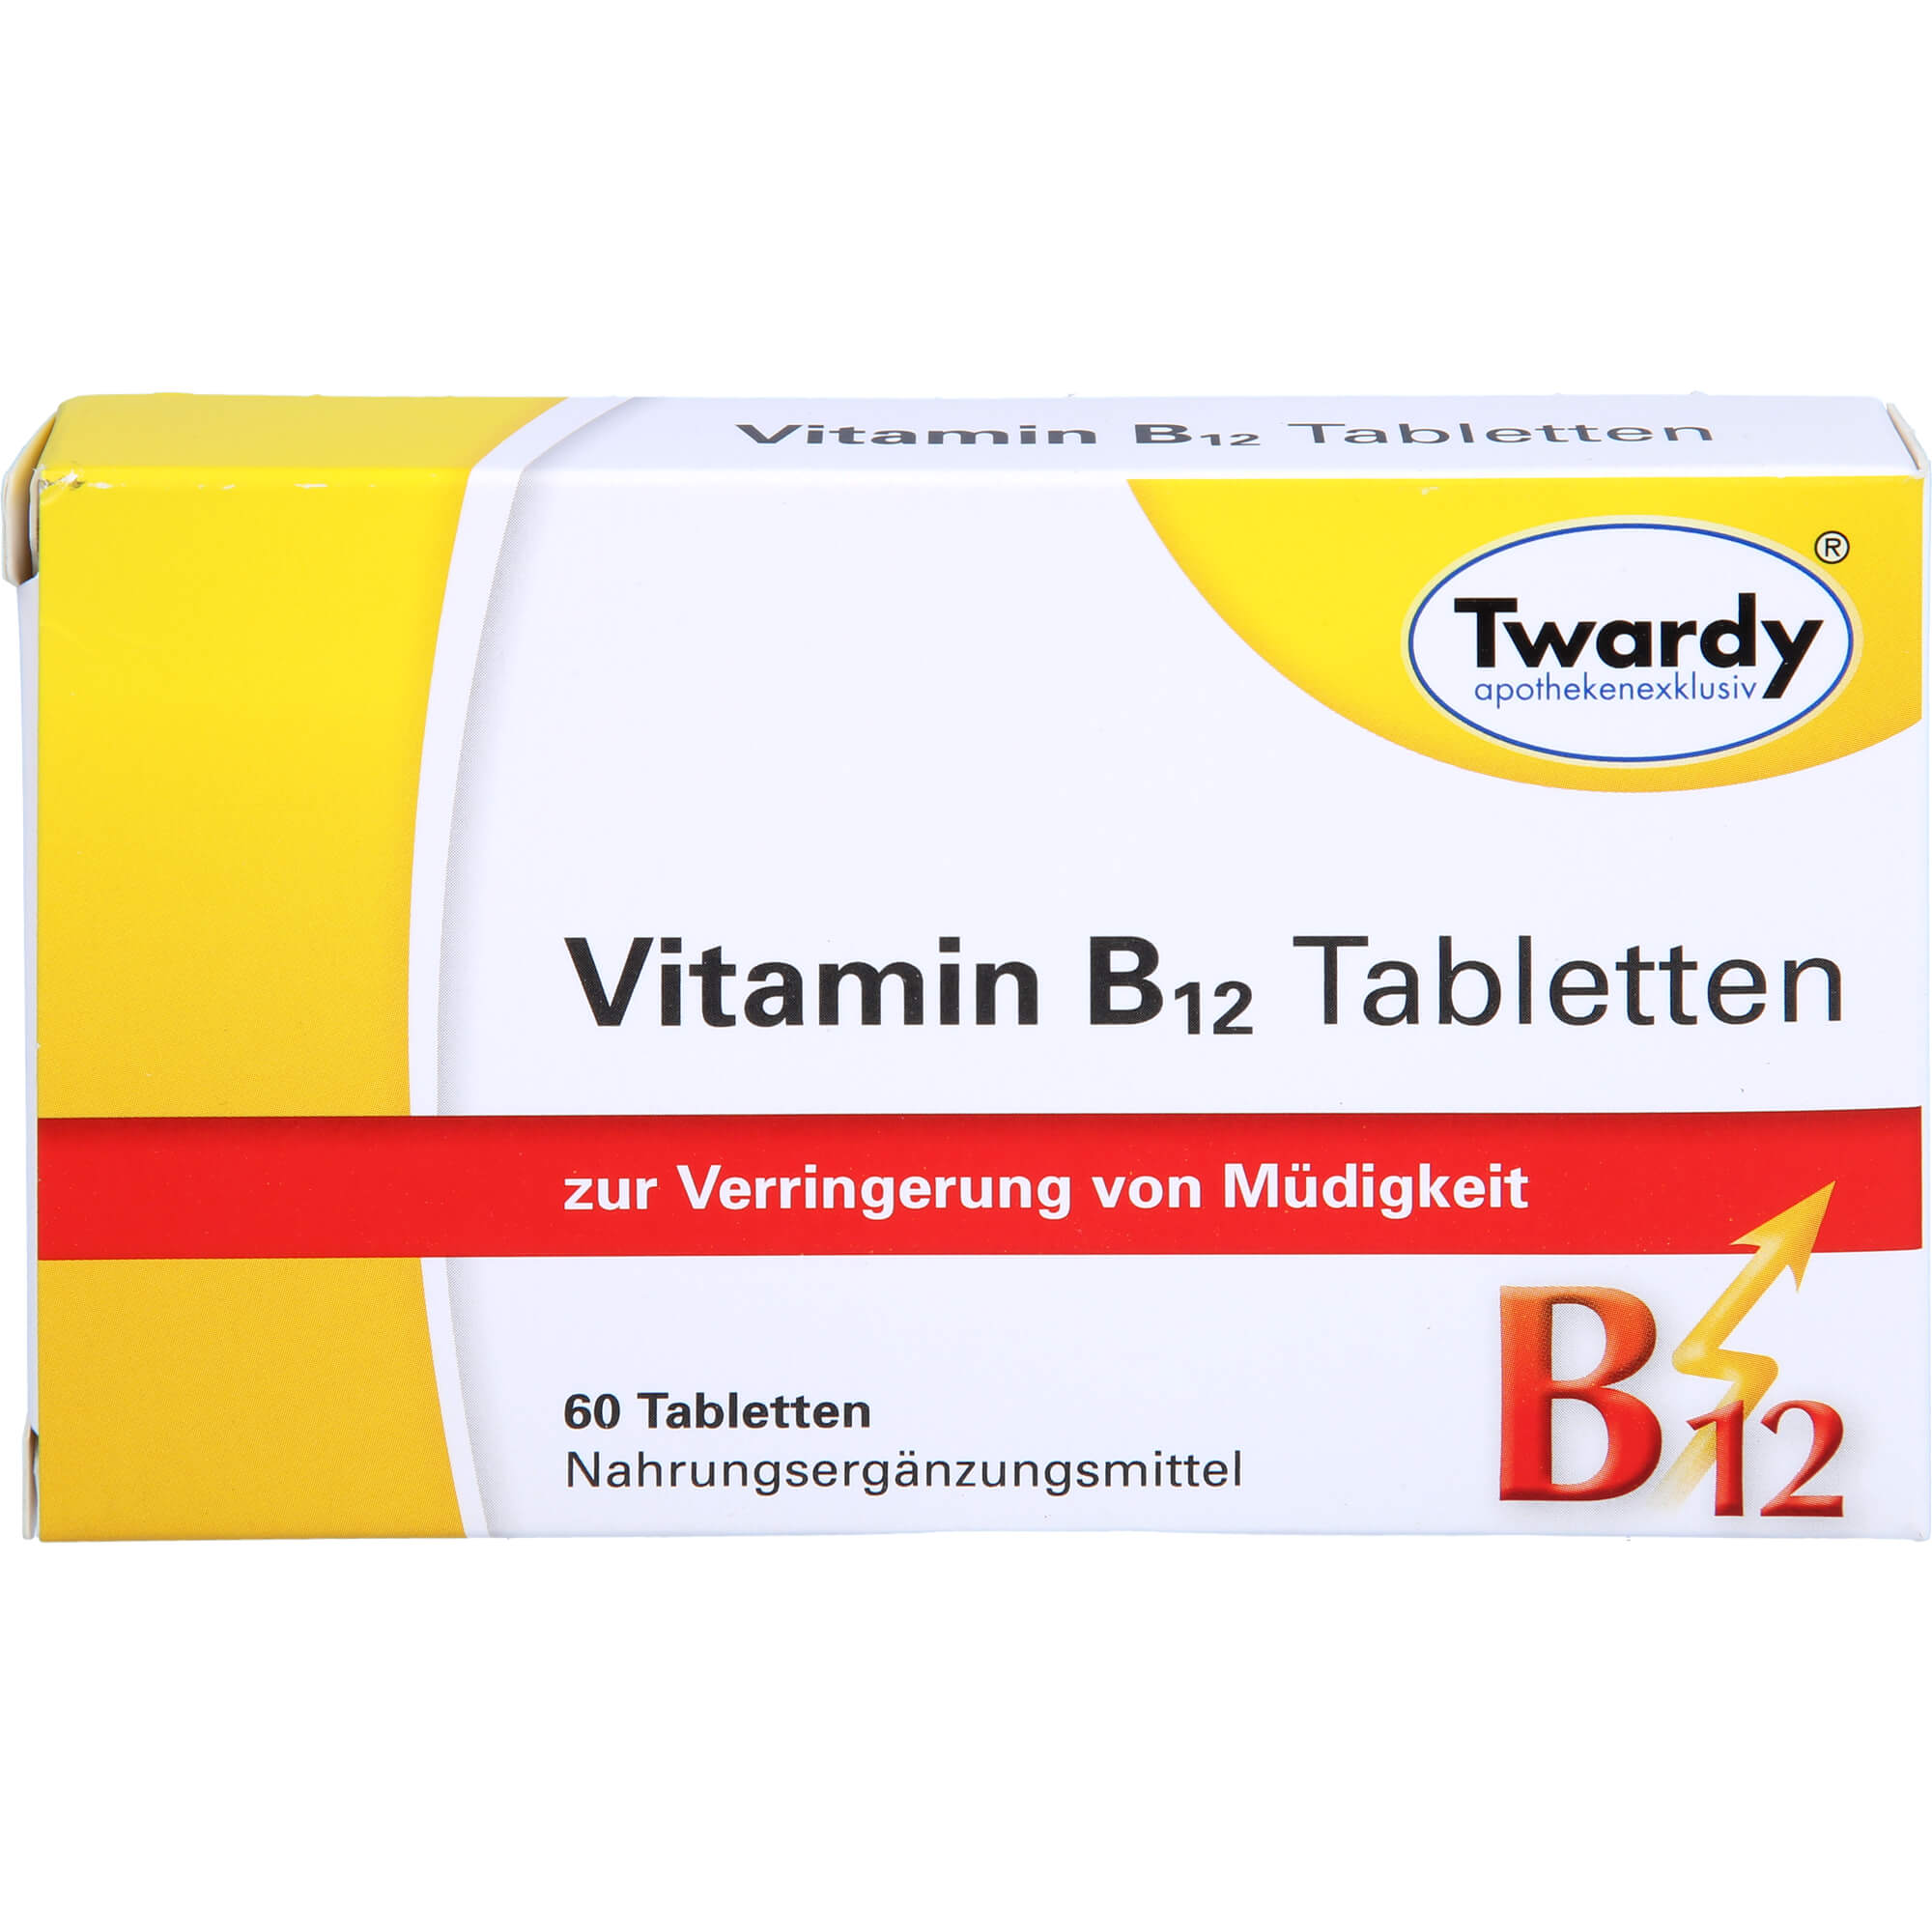 VITAMIN B12 TABLETTEN